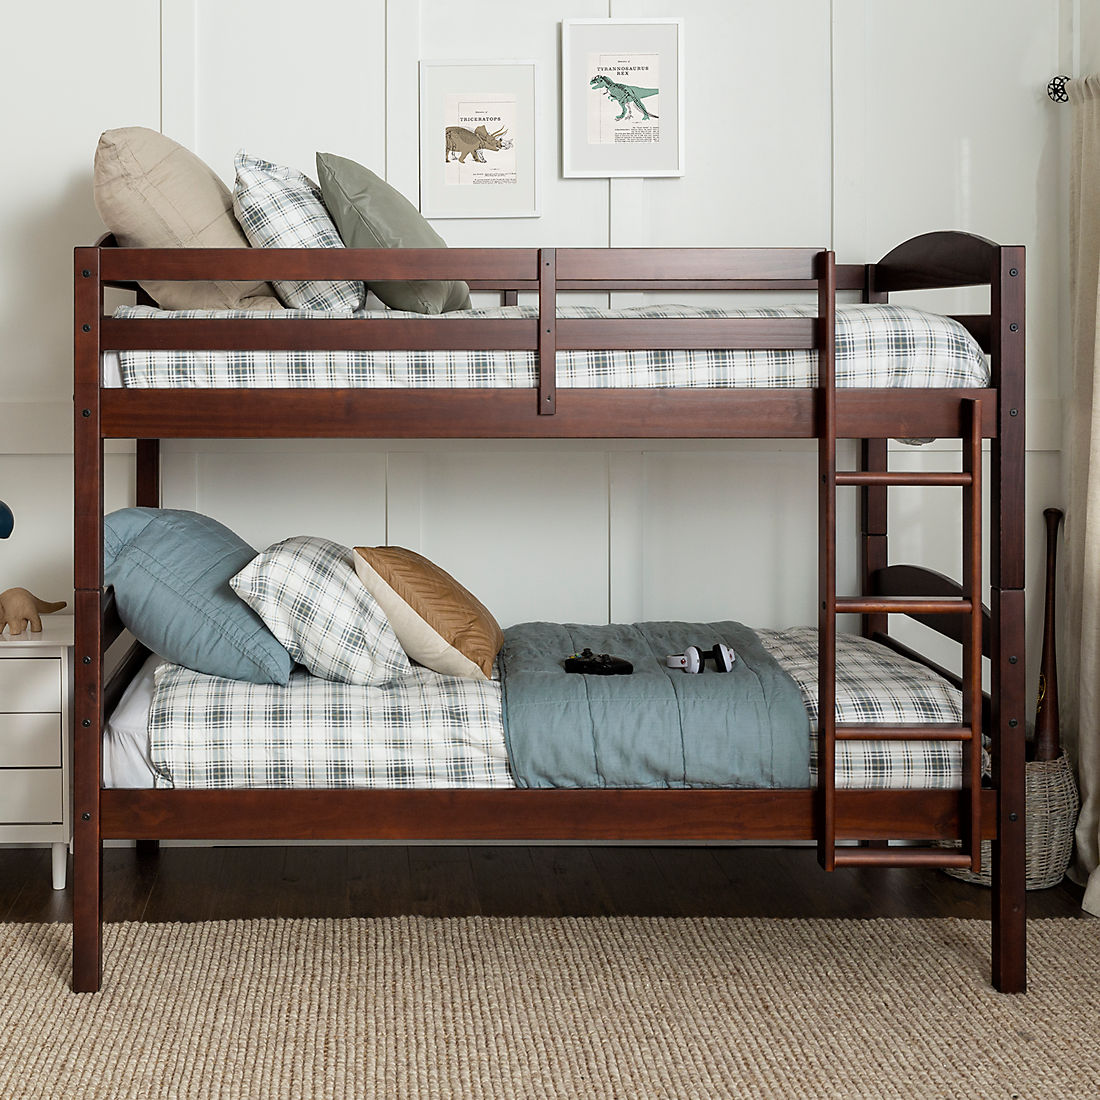 W Trends Twin Size Solid Wood Bunk Bed, Berkley Jensen Bunk Bed Reviews